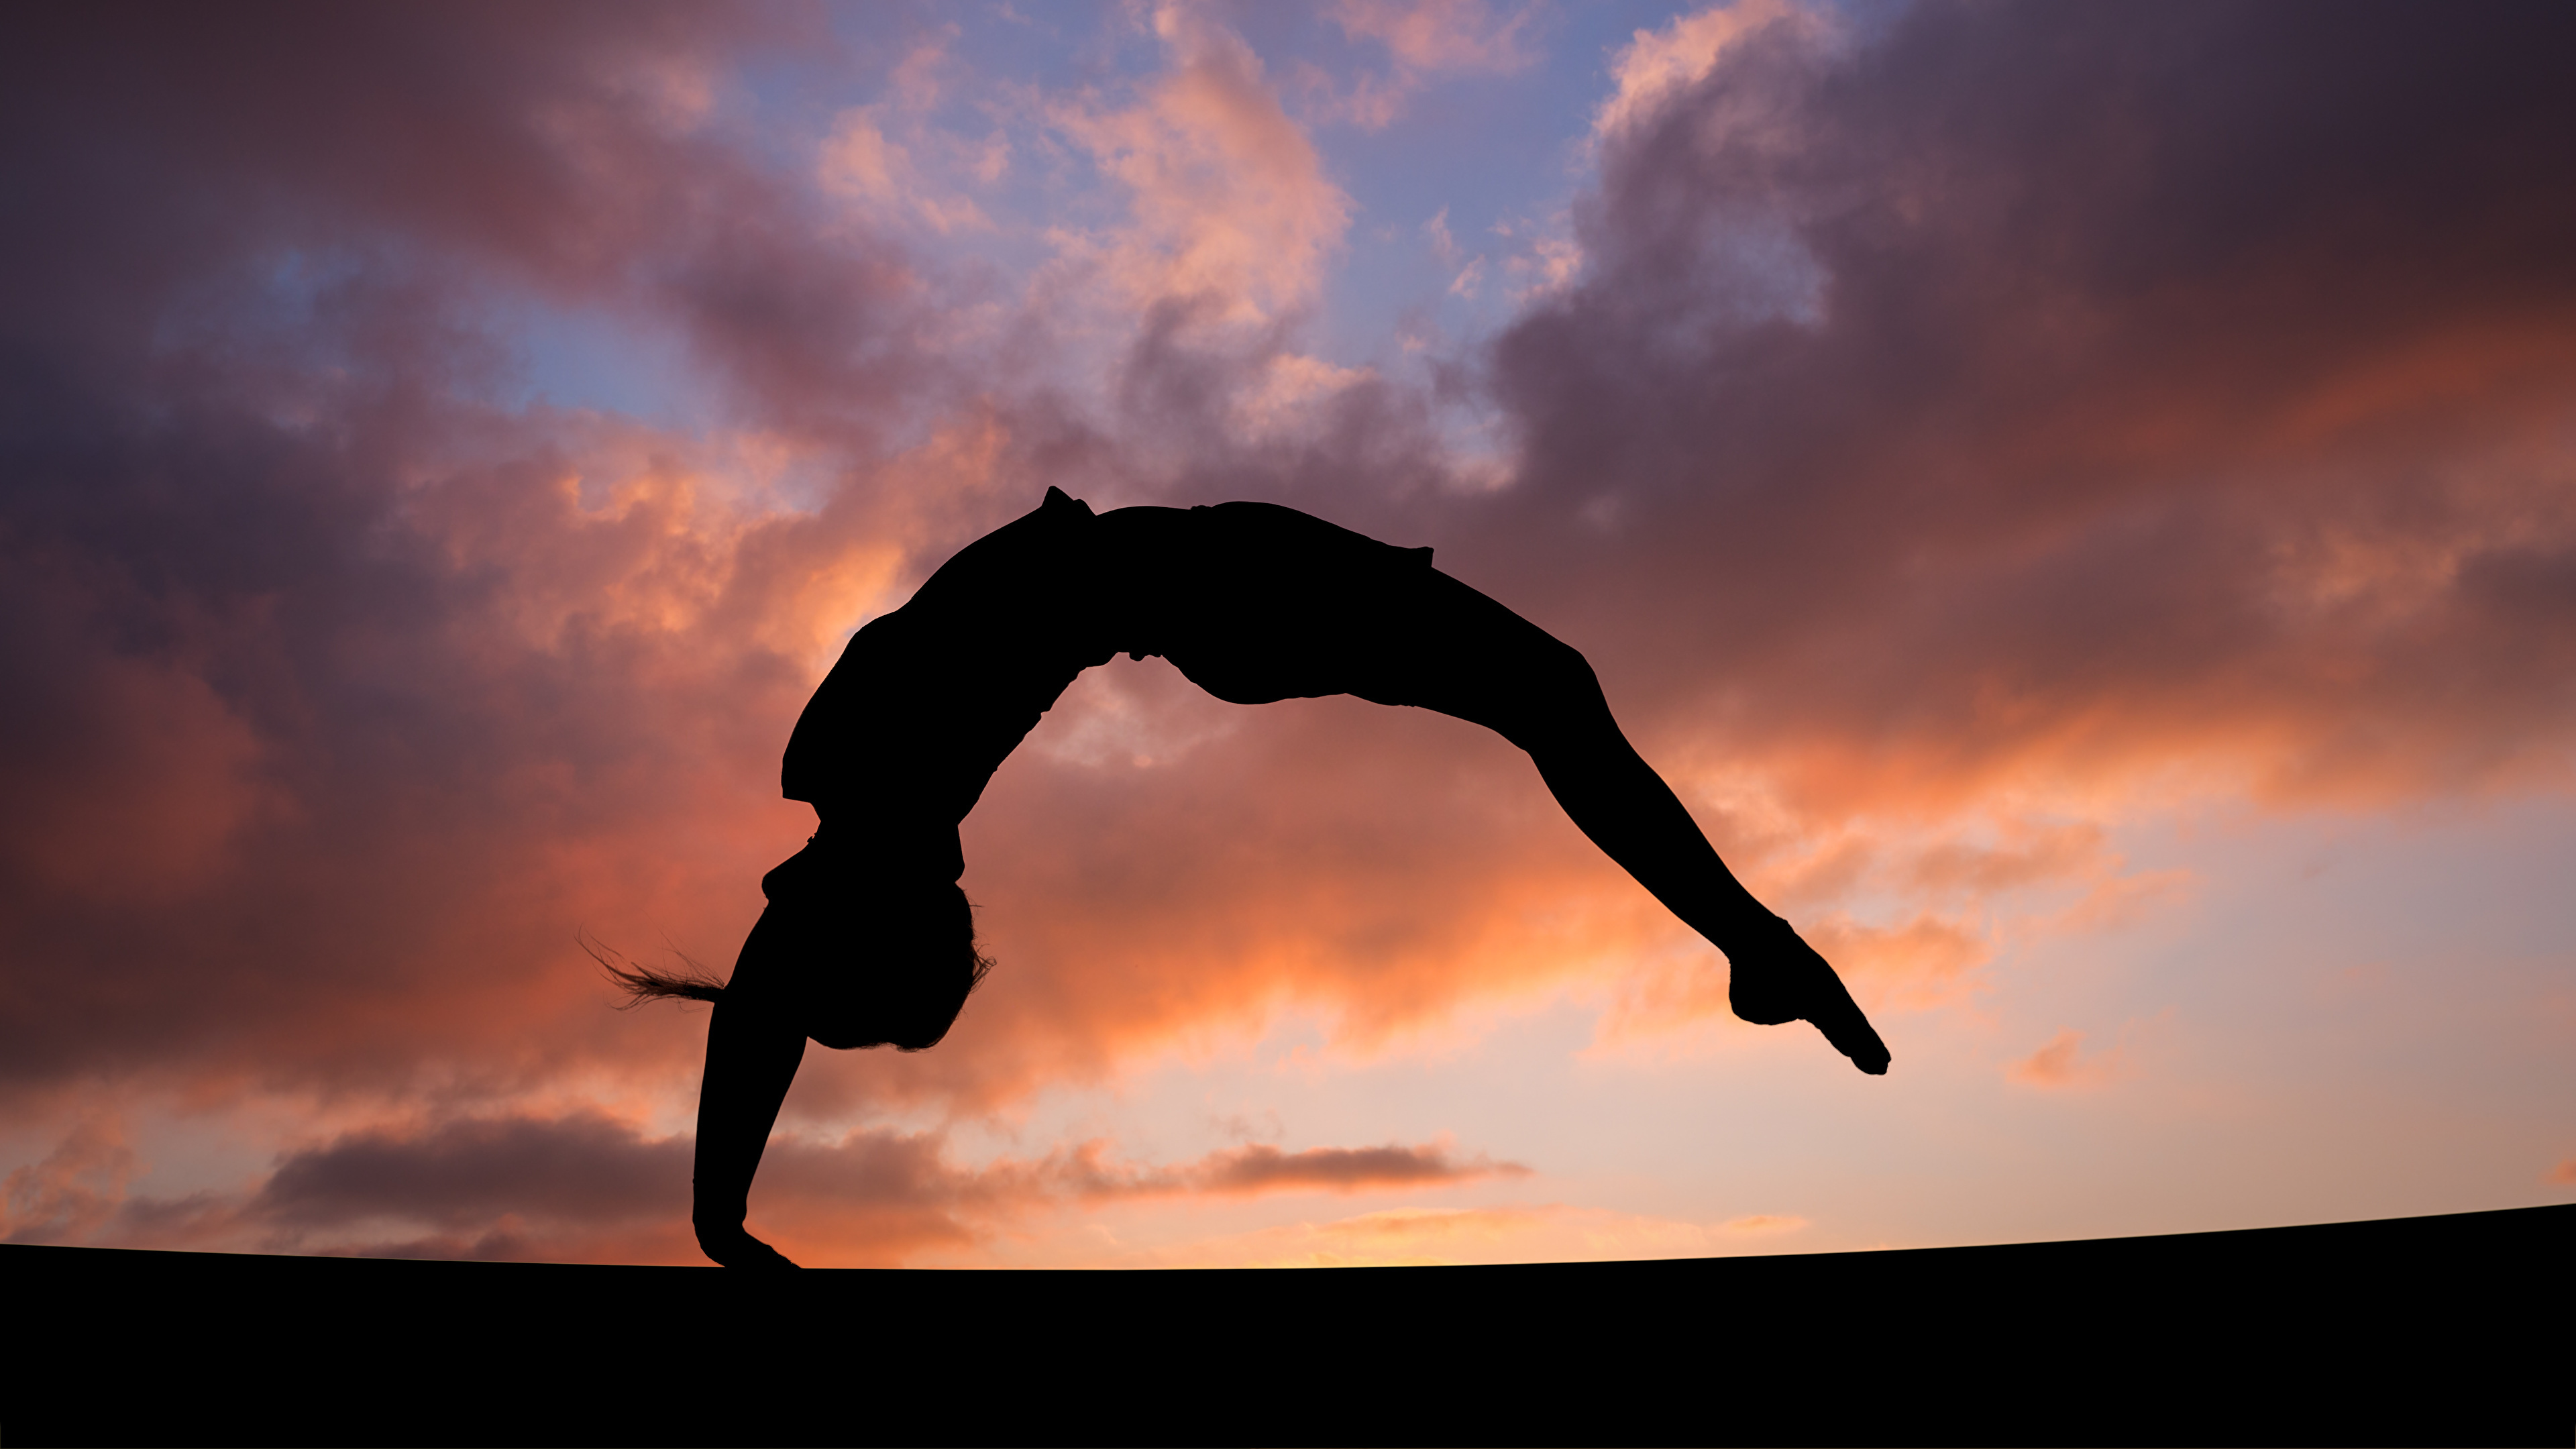 Acrobatic Sports: Gymnastics, Motor coordination, Balance, Human body performance. 3840x2160 4K Background.